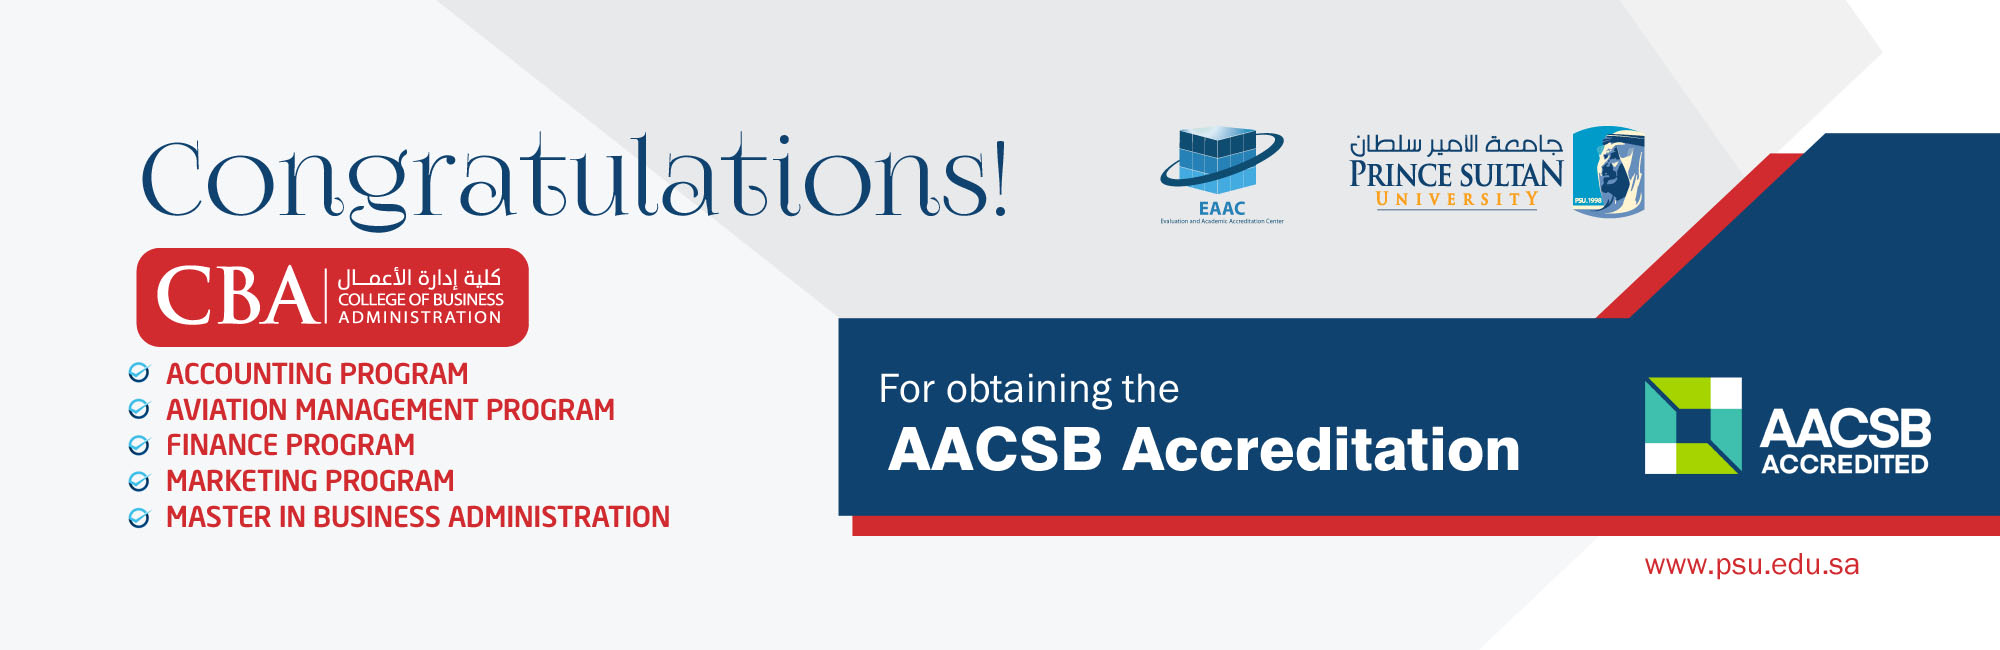 Congratulations Accreditation AACSB CBA